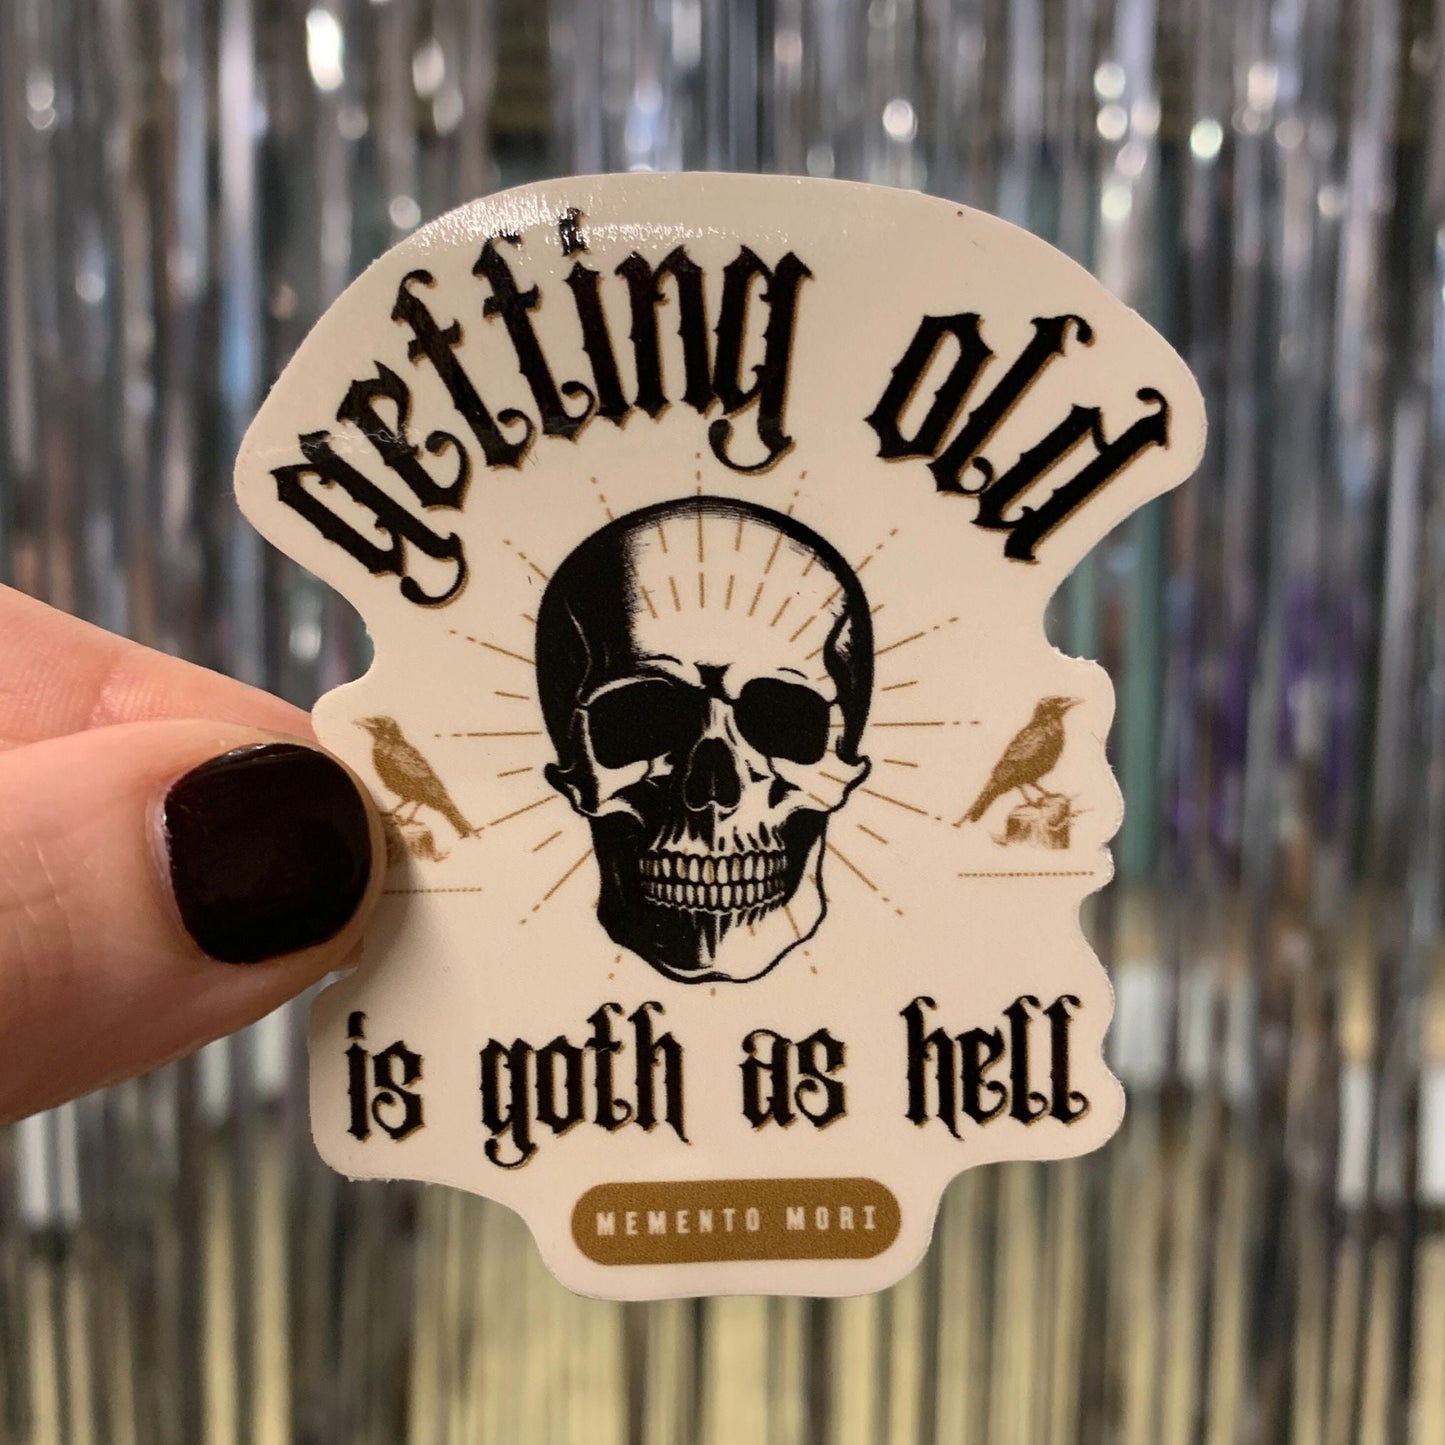 Getting Old is Goth as Hell Vintage Skull Tattoo Heavy Metal Themed Sticker | Vinyl Die Cut Decal